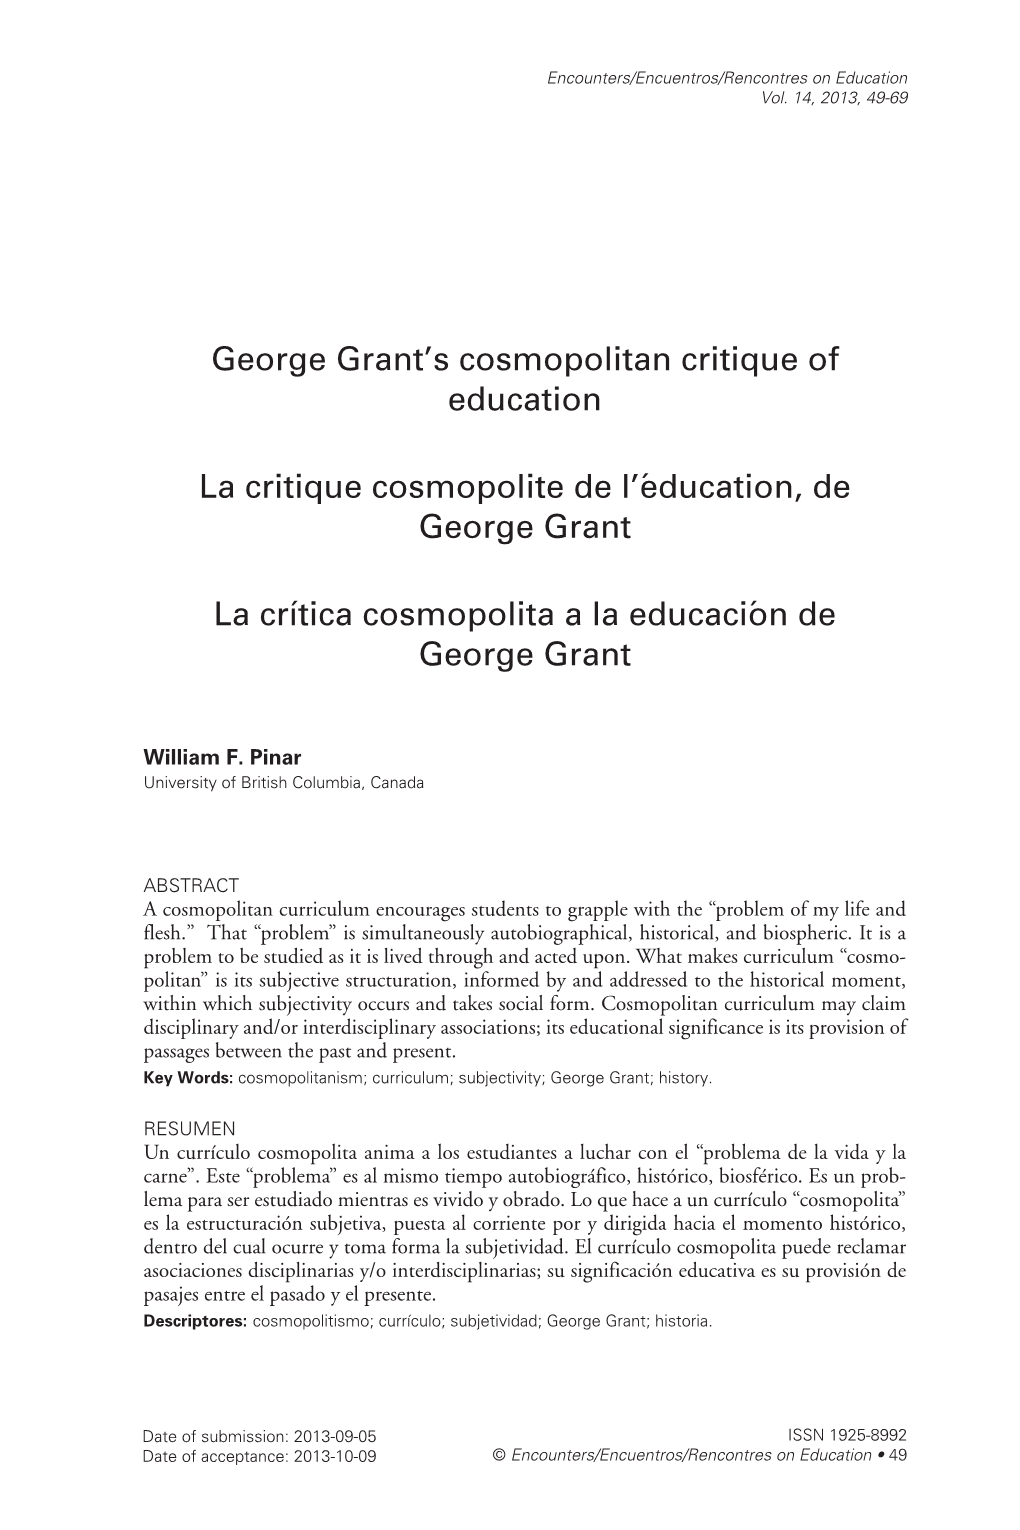 George Grant's Cosmopolitan Critique of Education